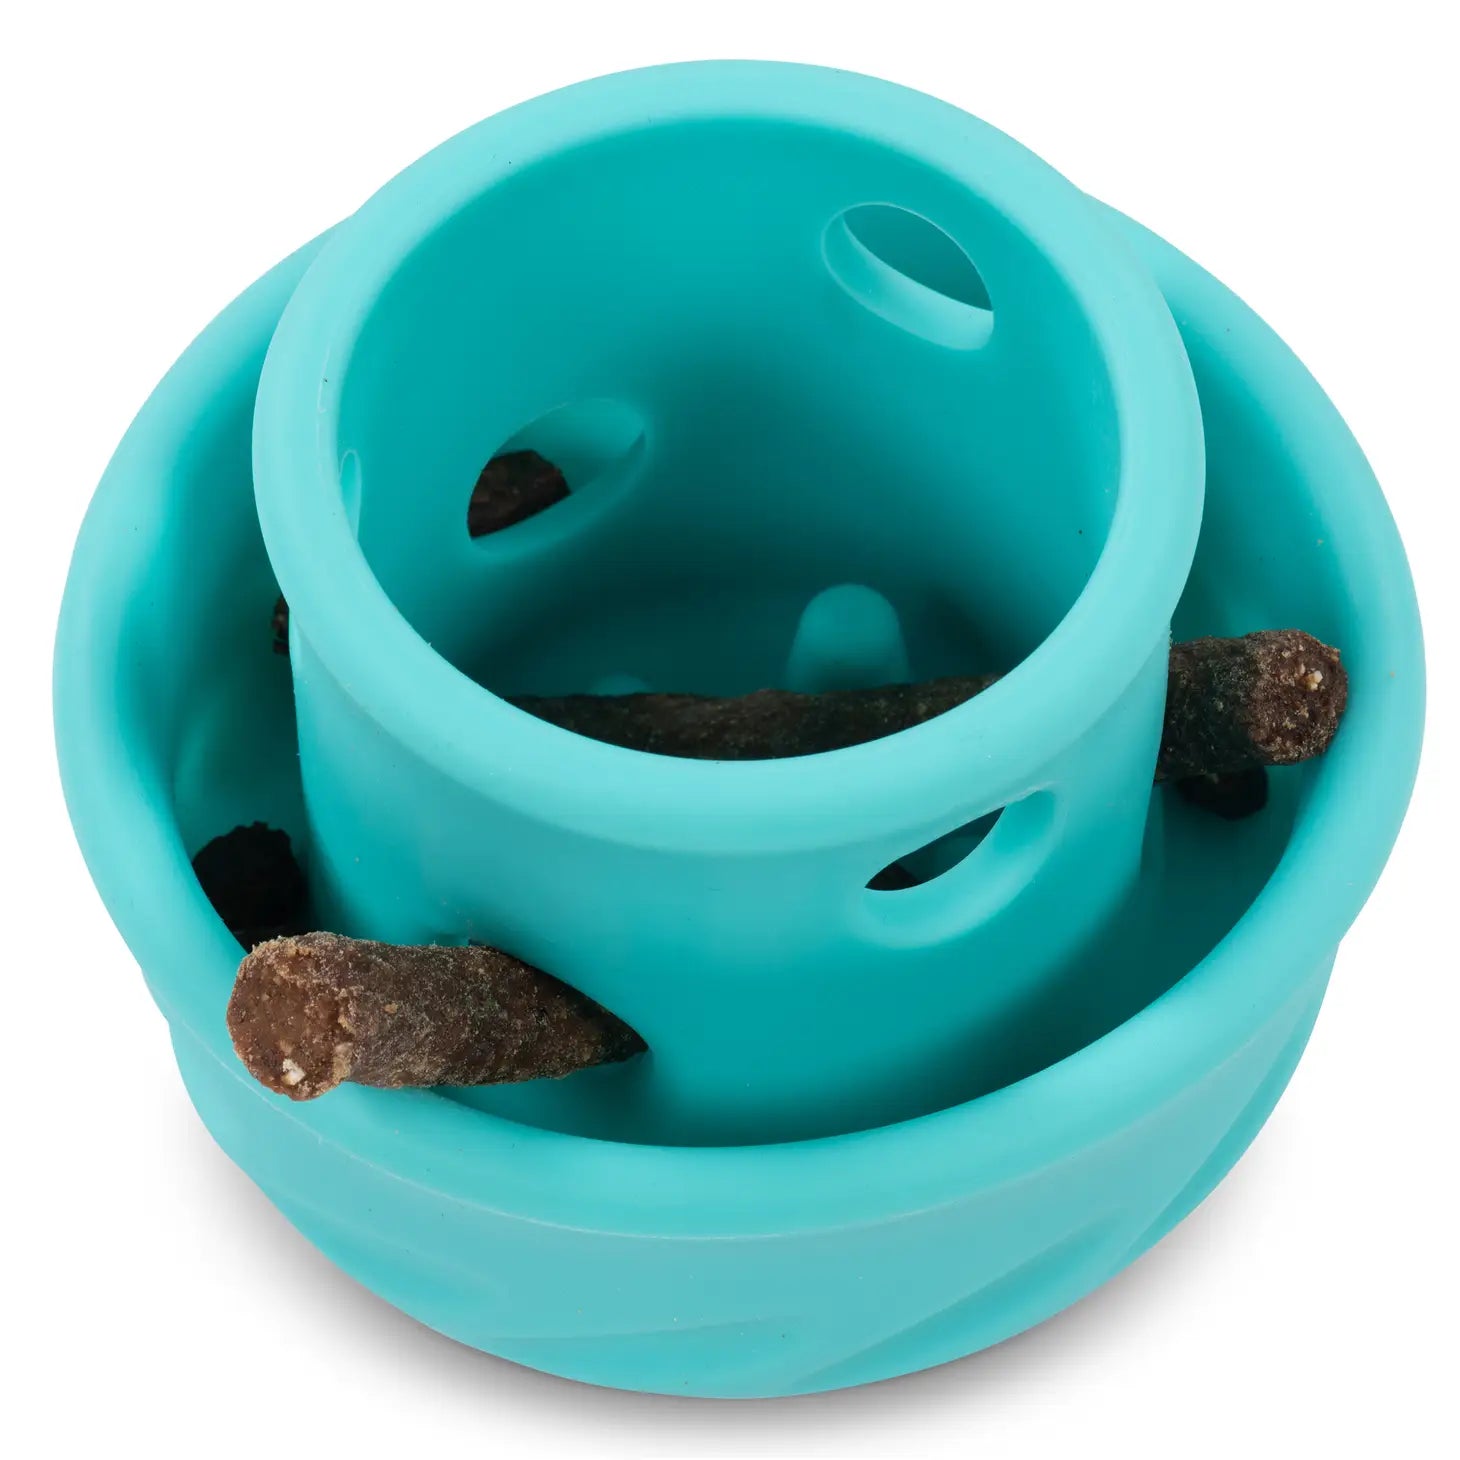 Blue Puzzle'n Play Mushroom dog toy stuffed with treats